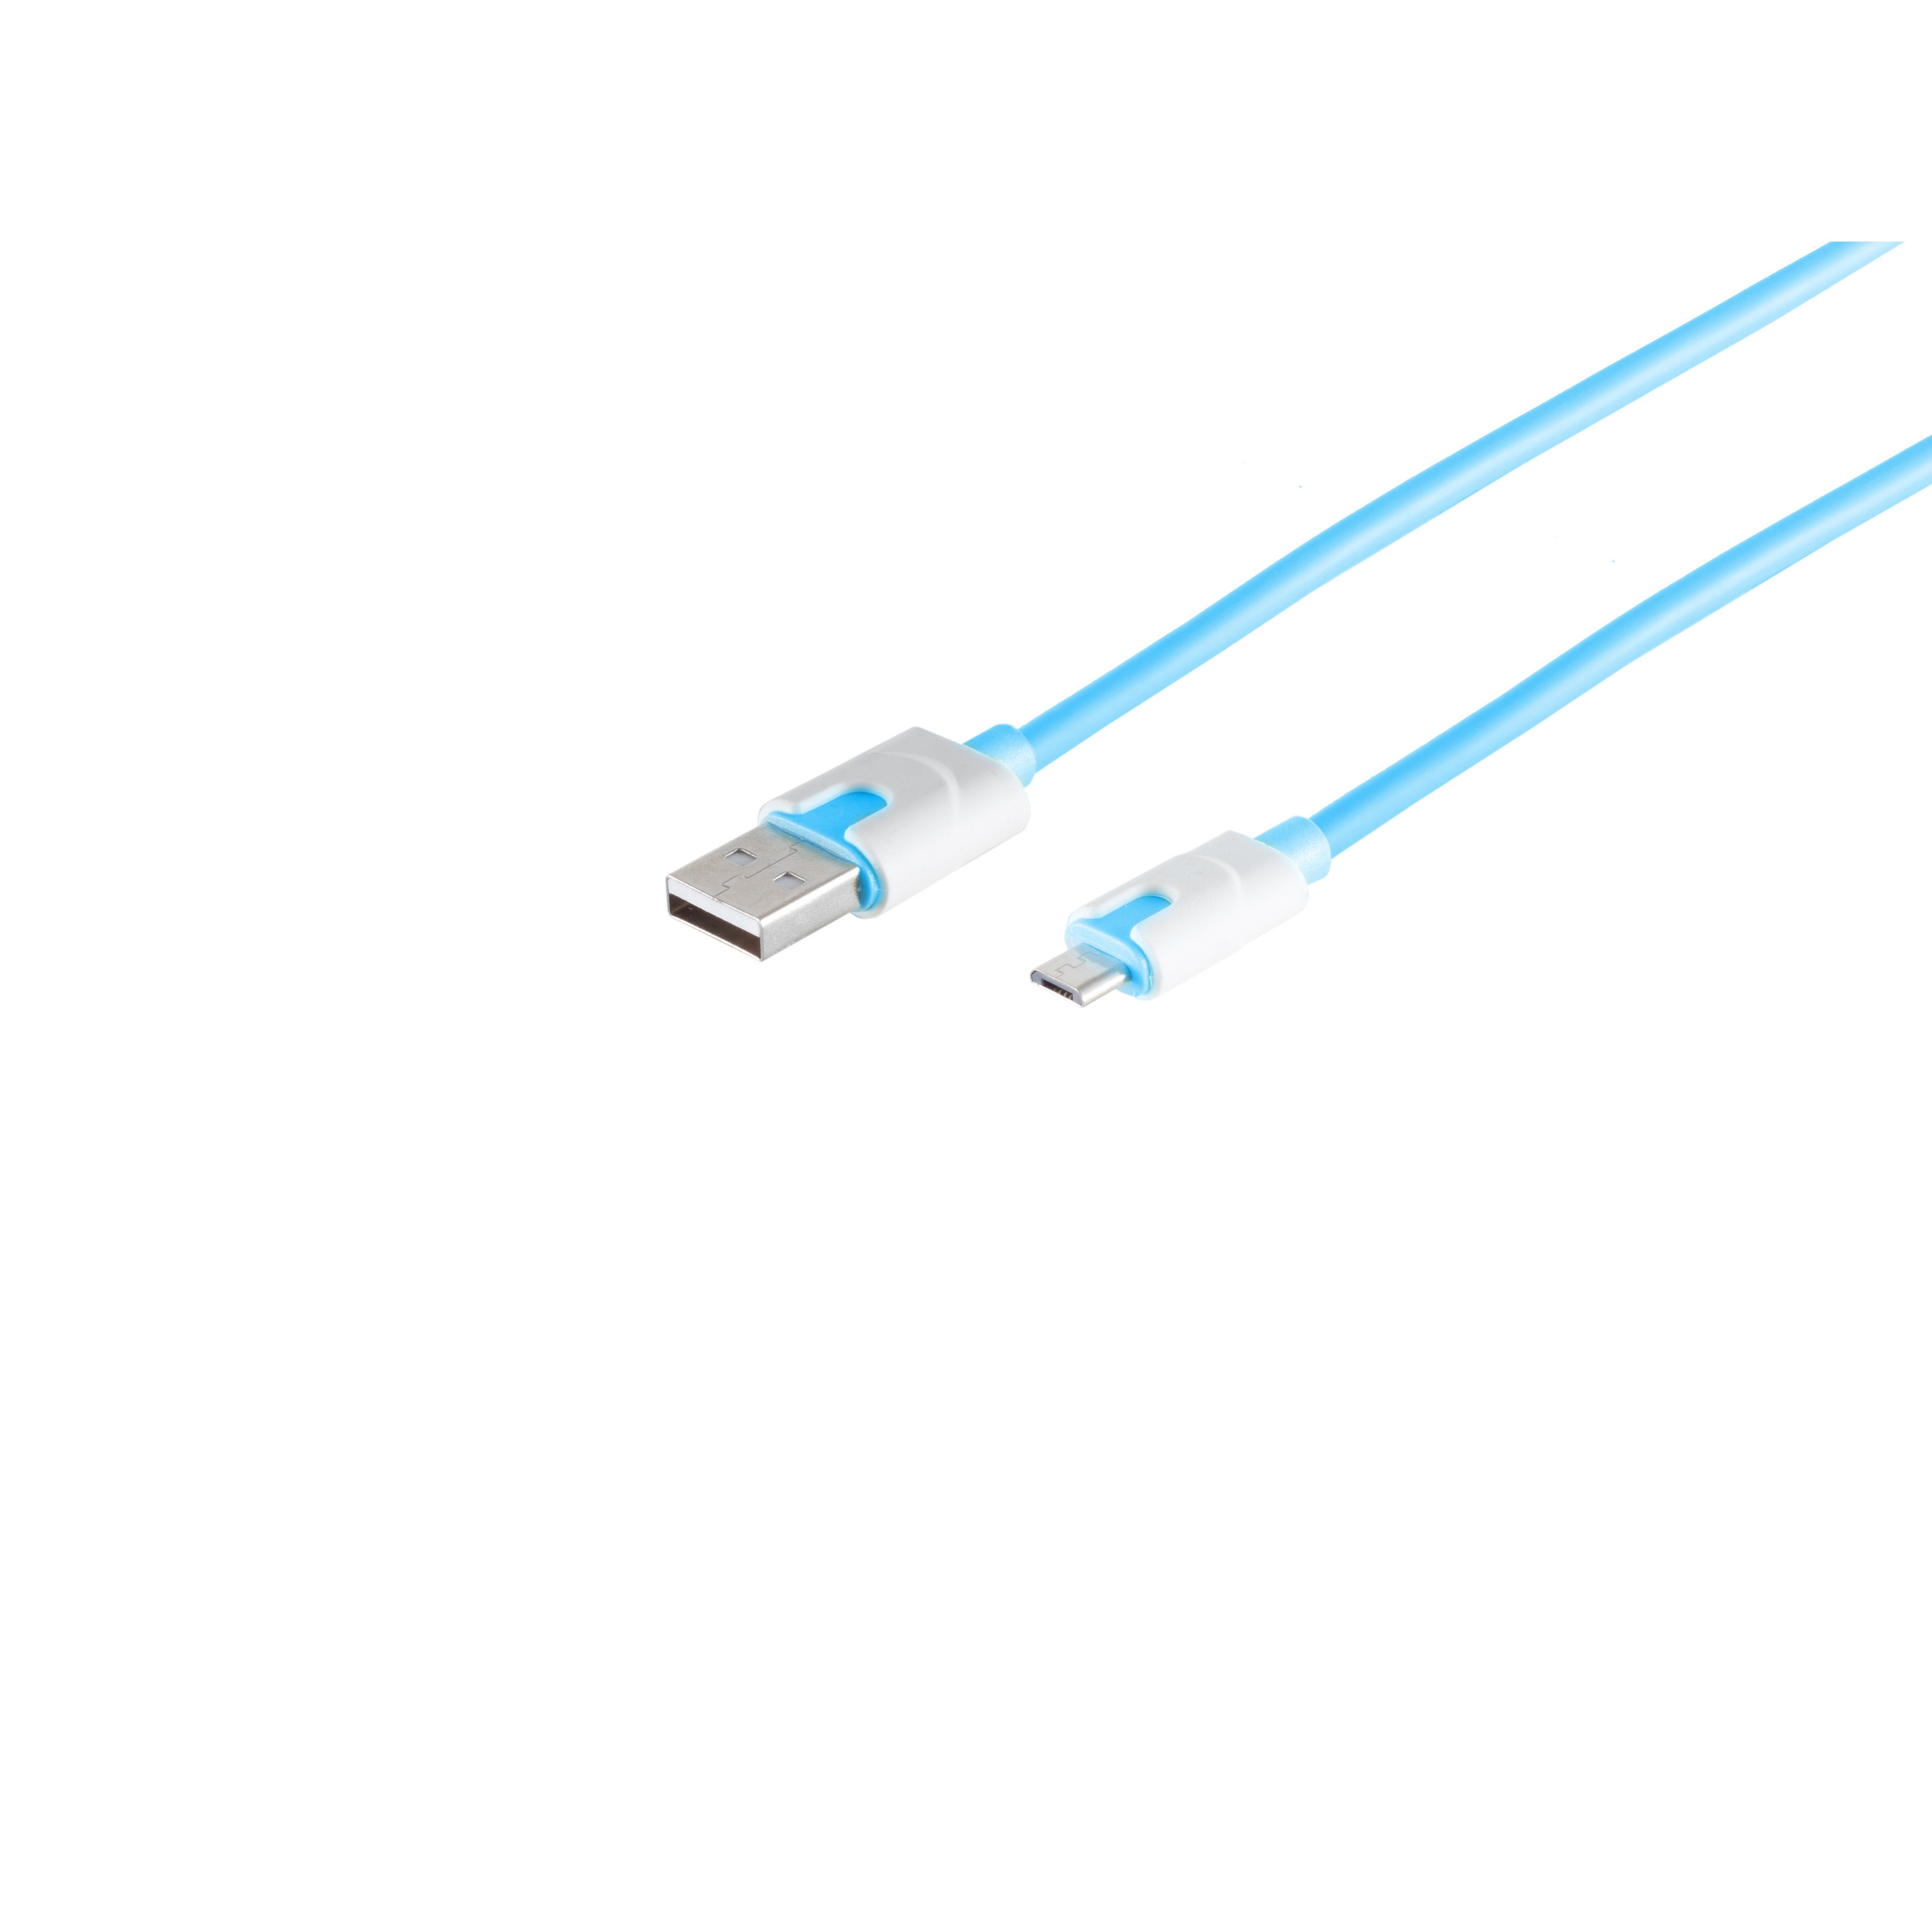 Stecker CONNECTIVITY 2m S/CONN blau, USB USB-Ladekabel USB auf B, A Micro MAXIMUM Kabel